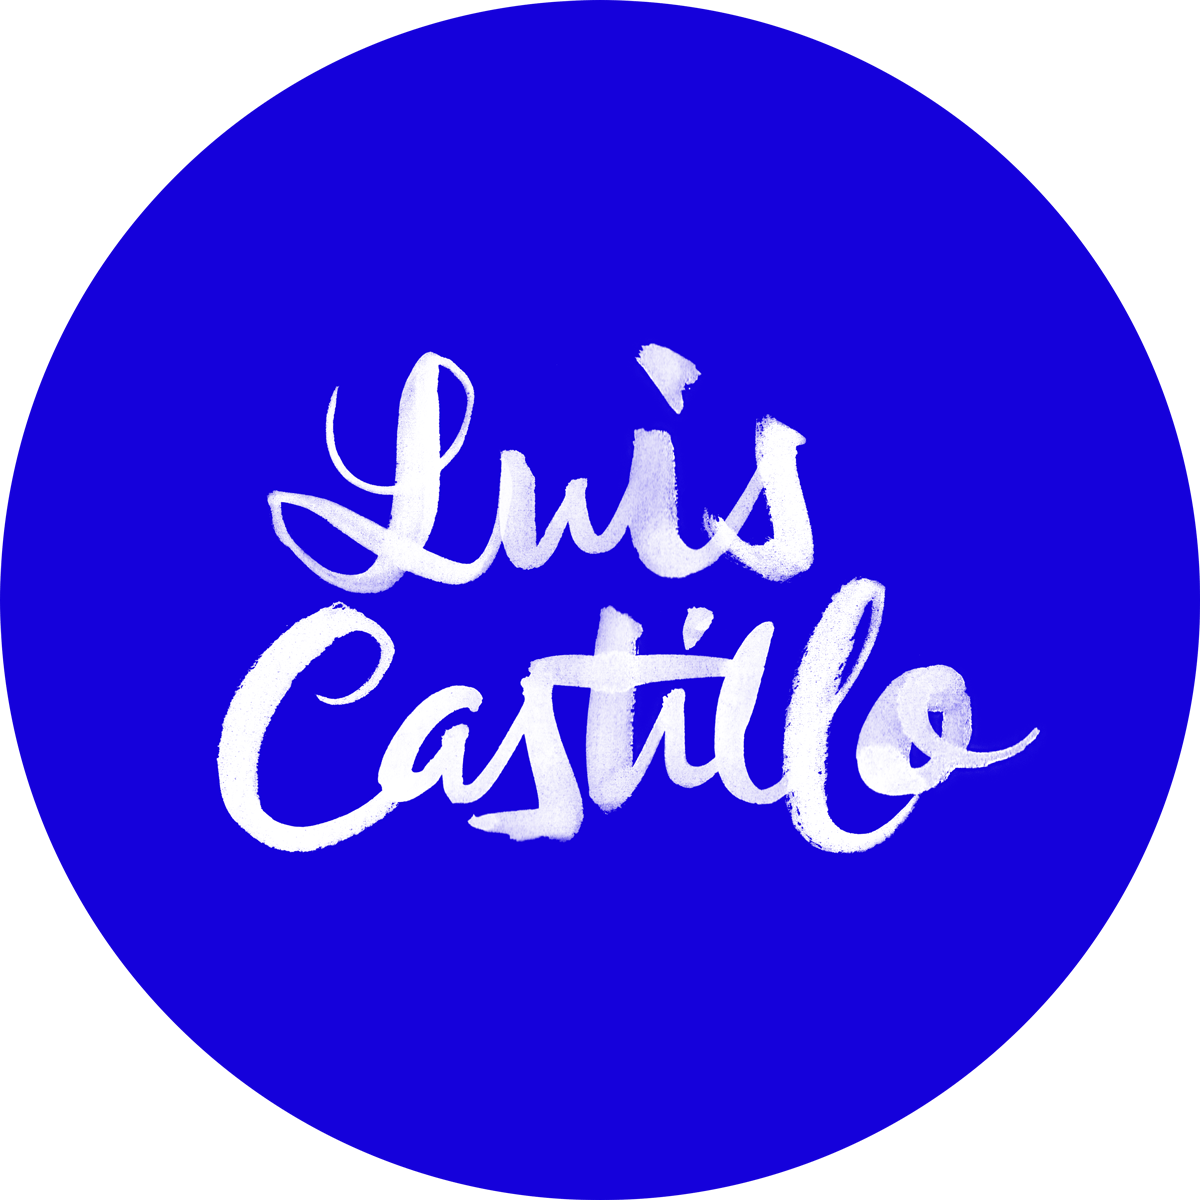 Luis Castillo